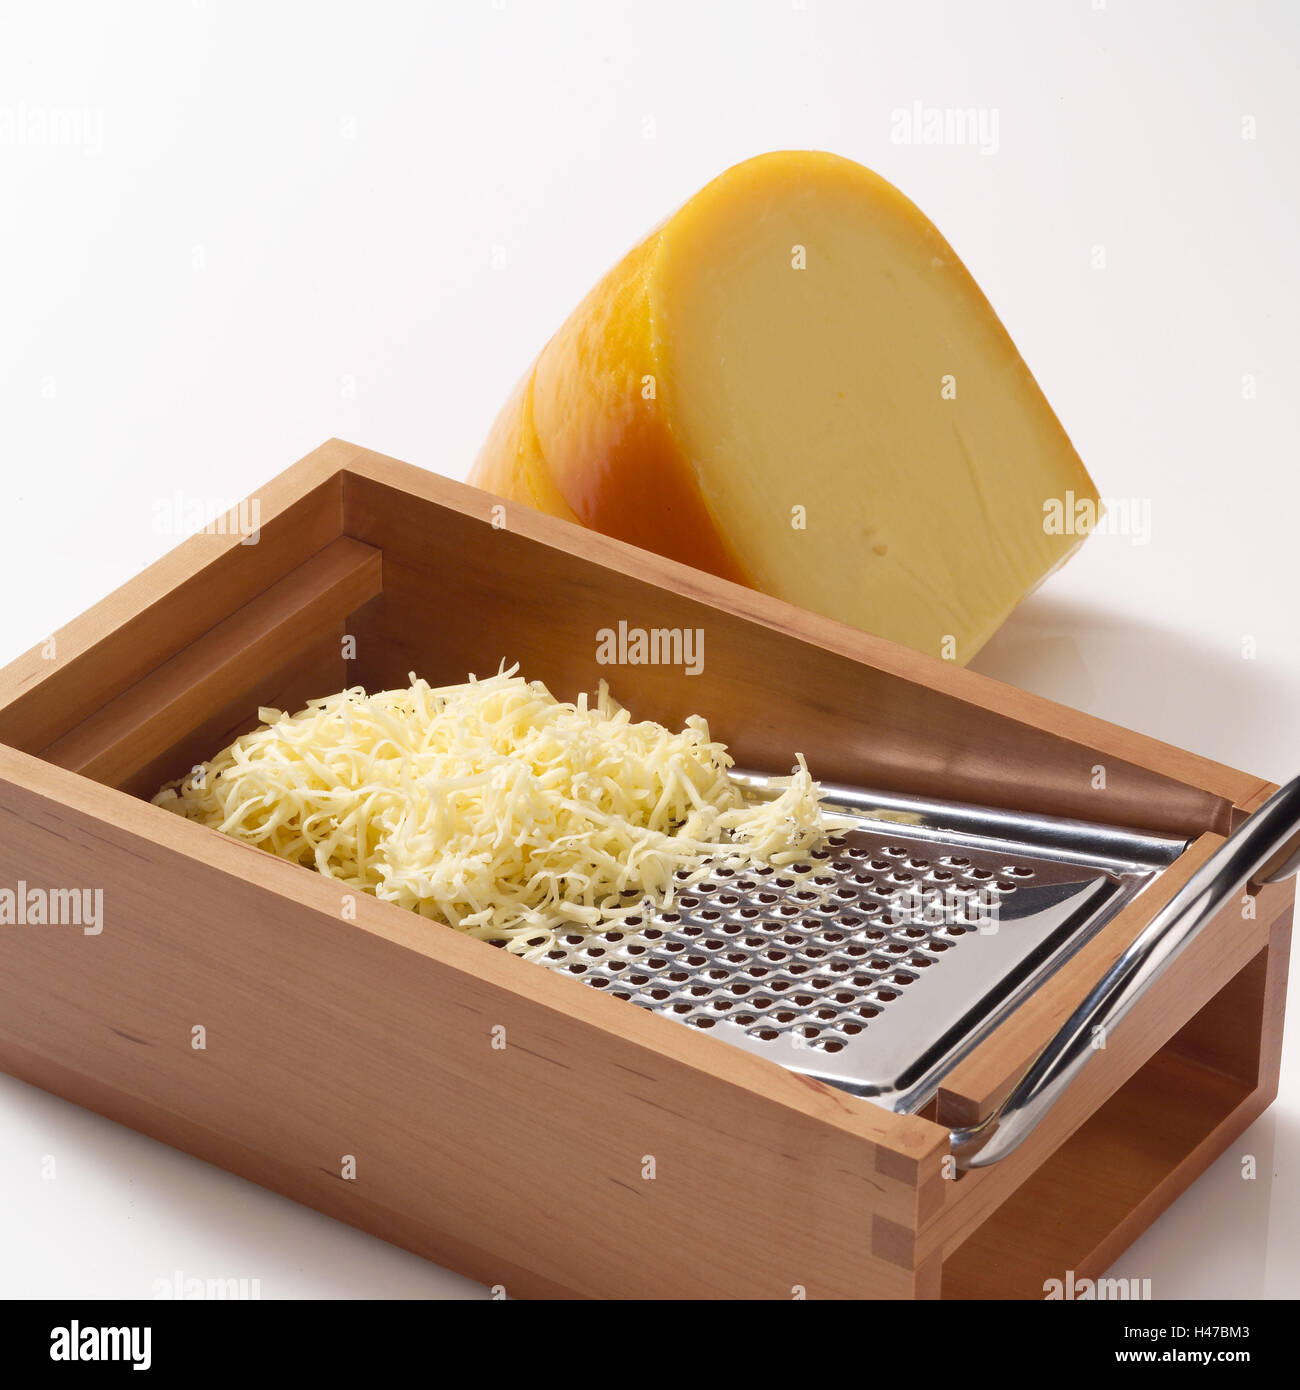 Grating cheese, Stock Photo